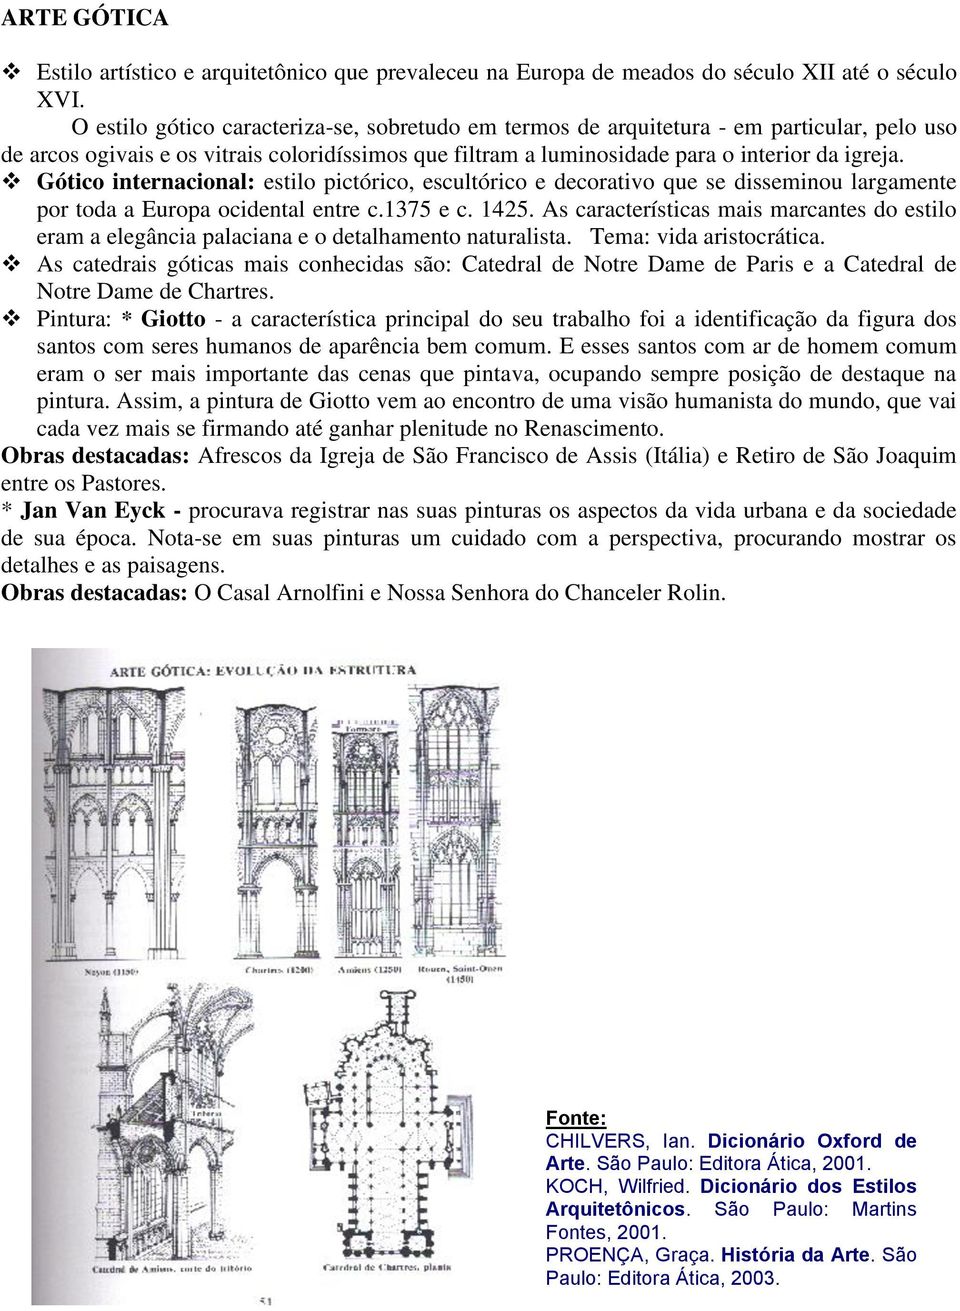 Gótico internacional: estilo pictórico, escultórico e decorativo que se disseminou largamente por toda a Europa ocidental entre c.1375 e c. 1425.